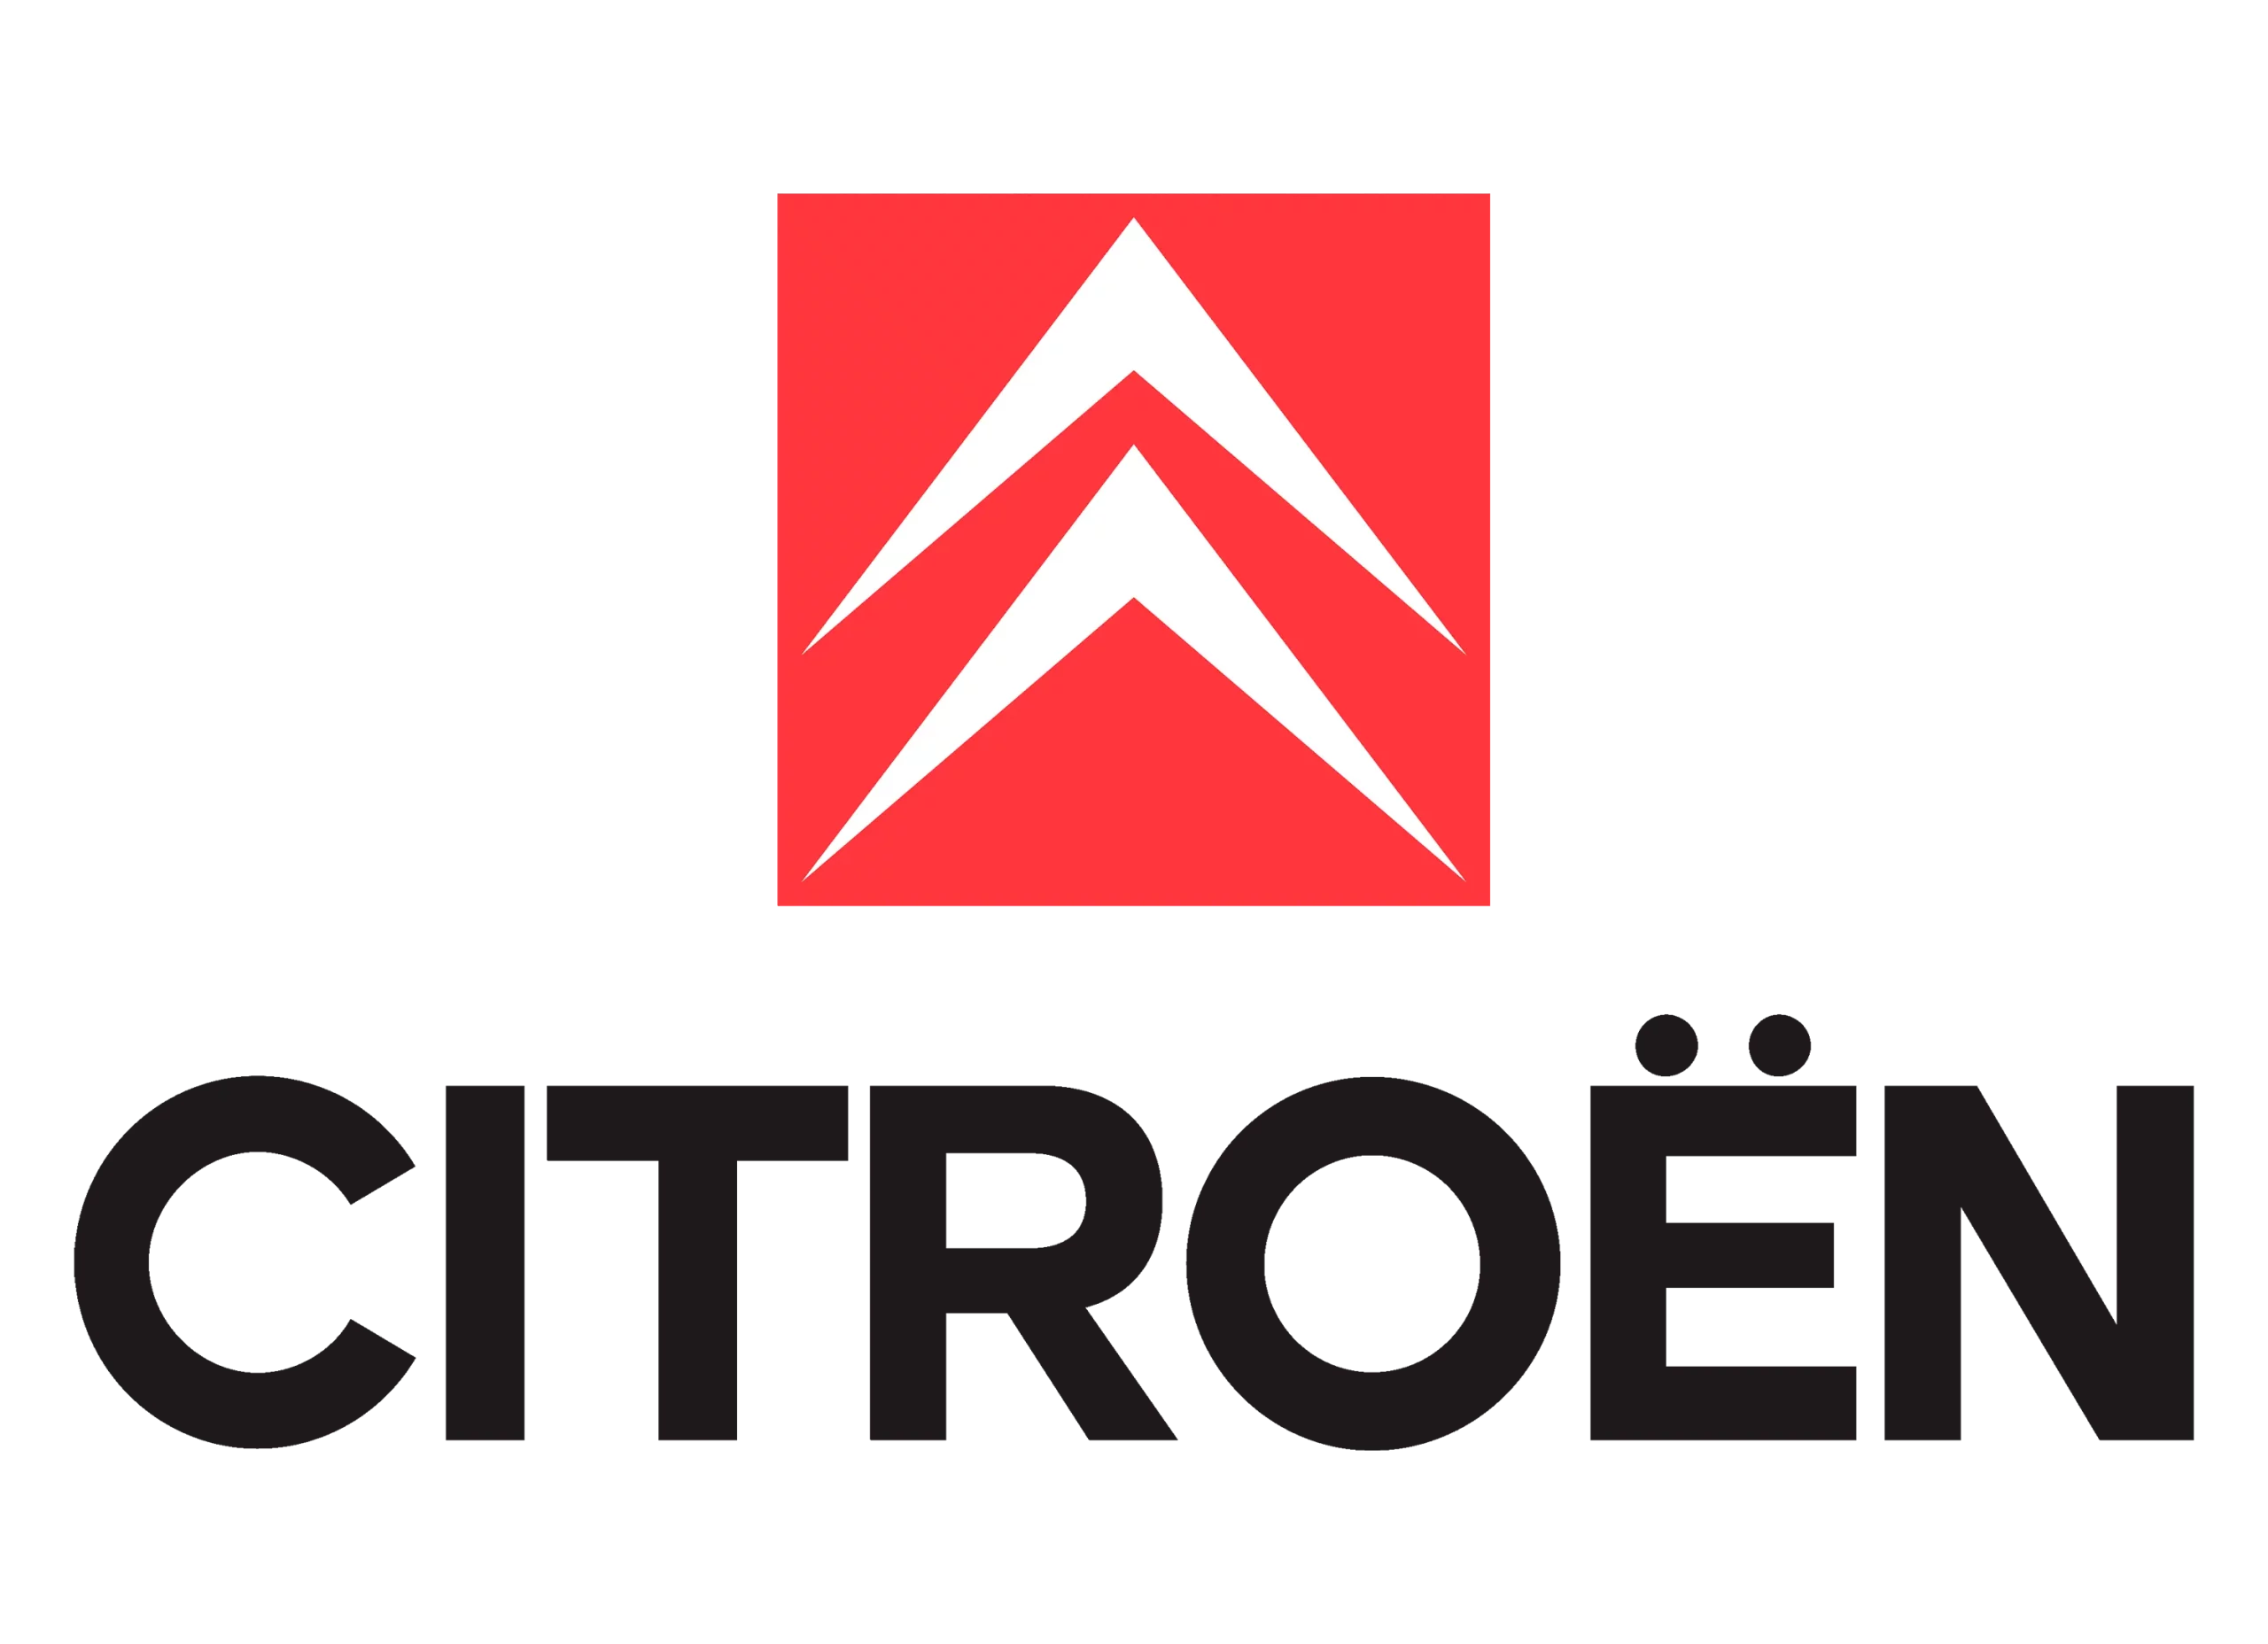 Citroen logo 1985-2009